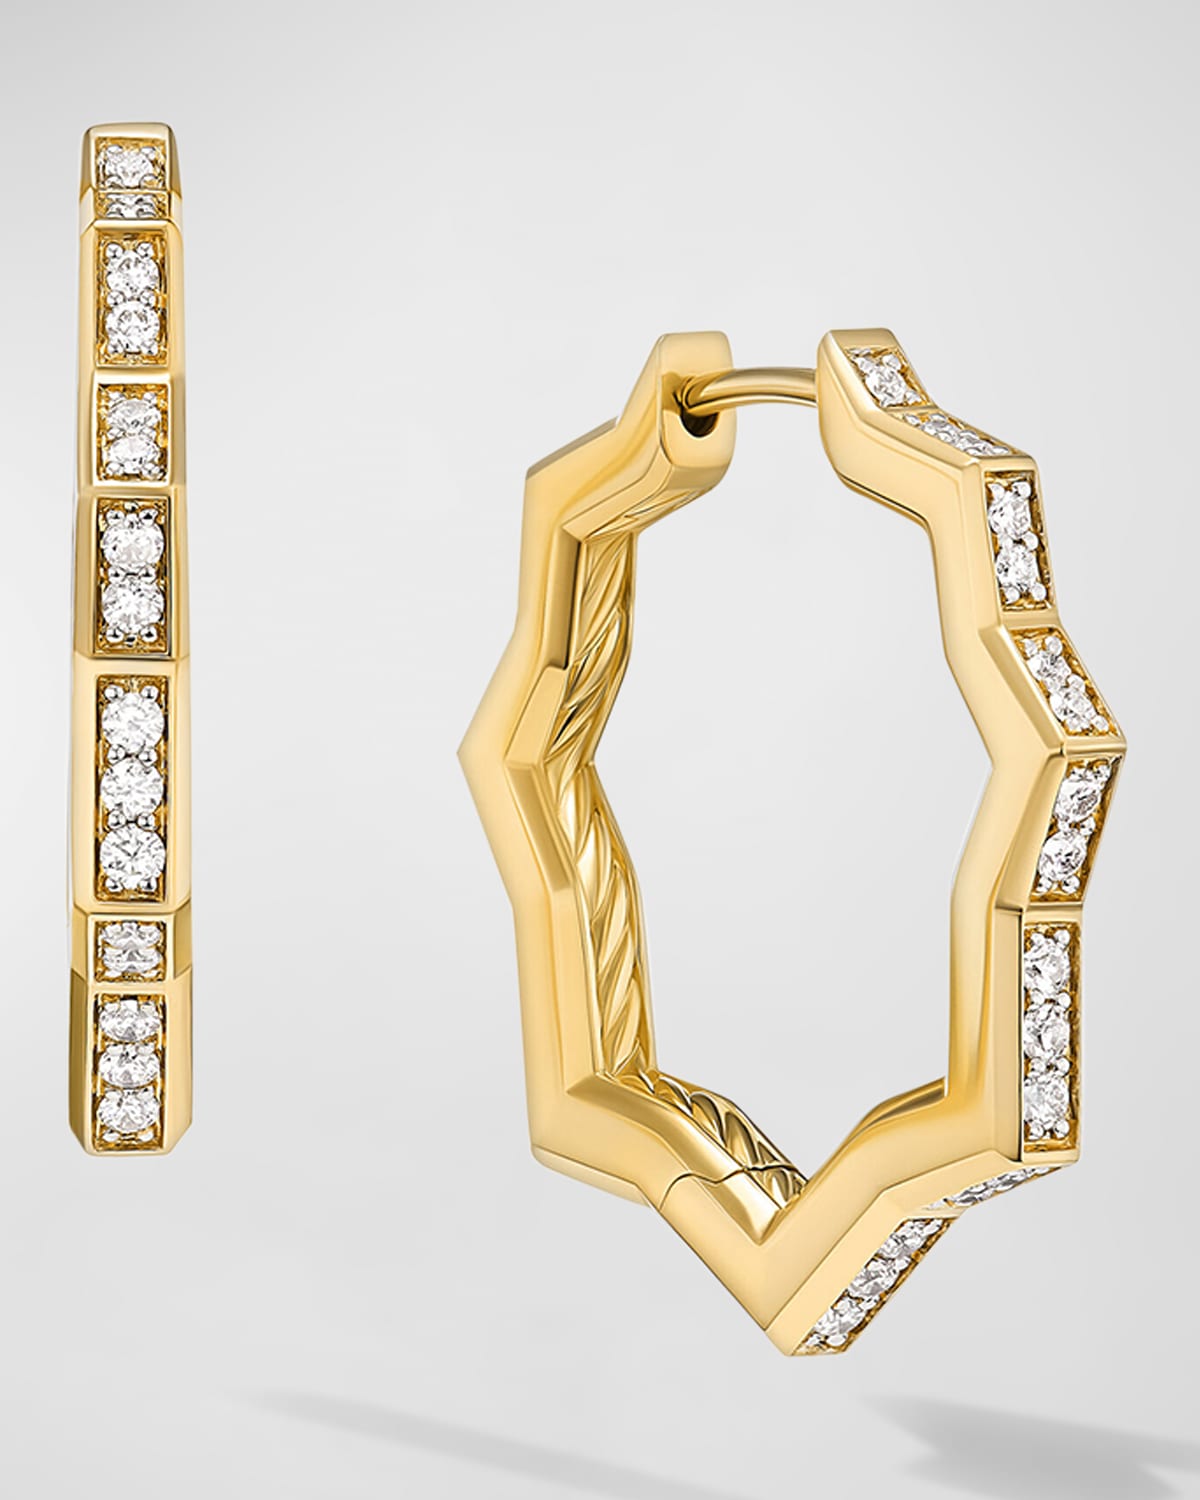 Stax Hoop Earrings with Diamonds in 18K Gold, 2.6mm